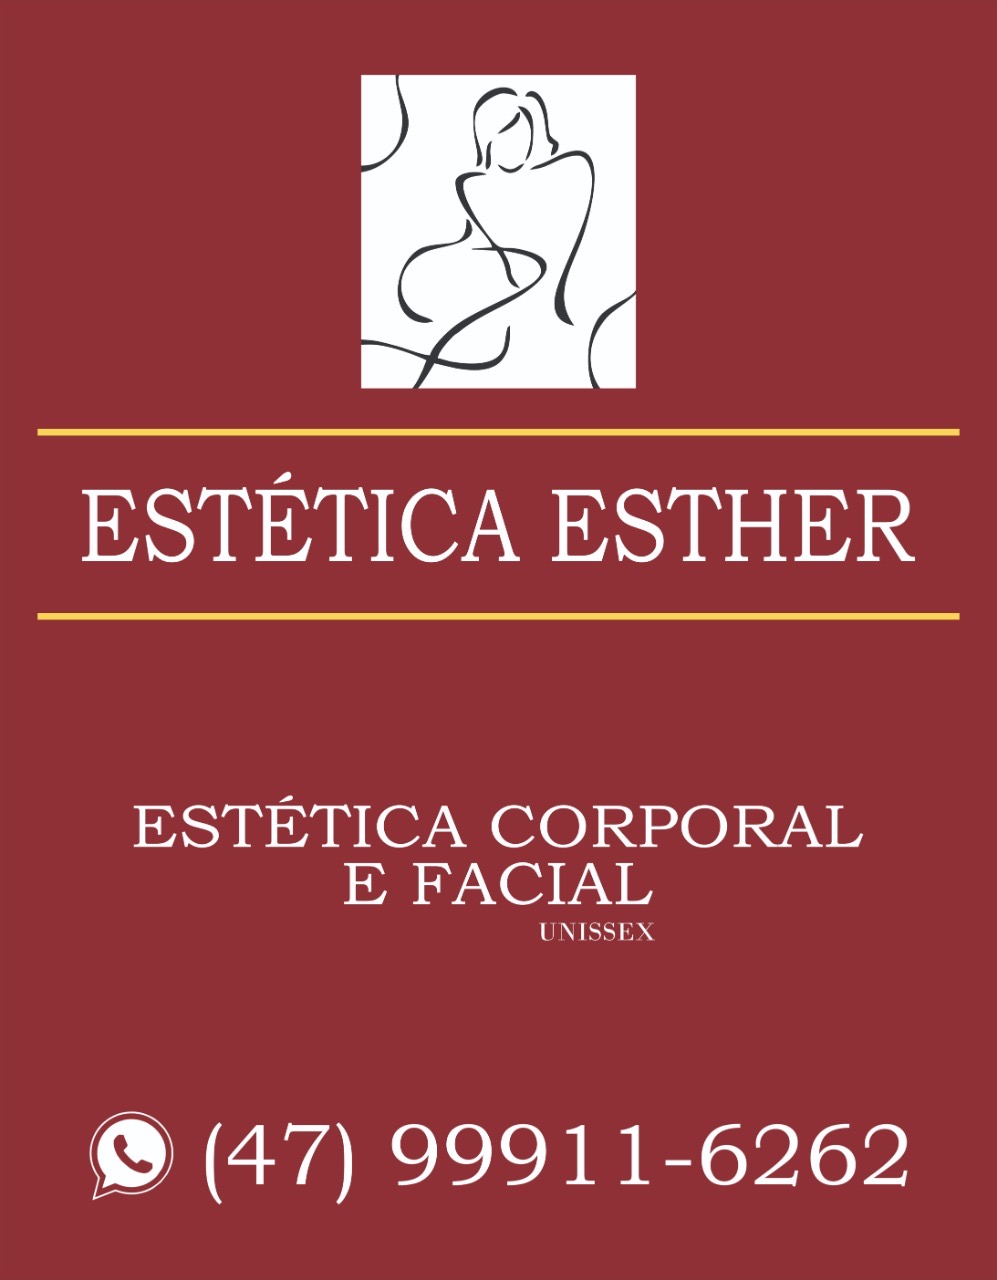 Estética Esther